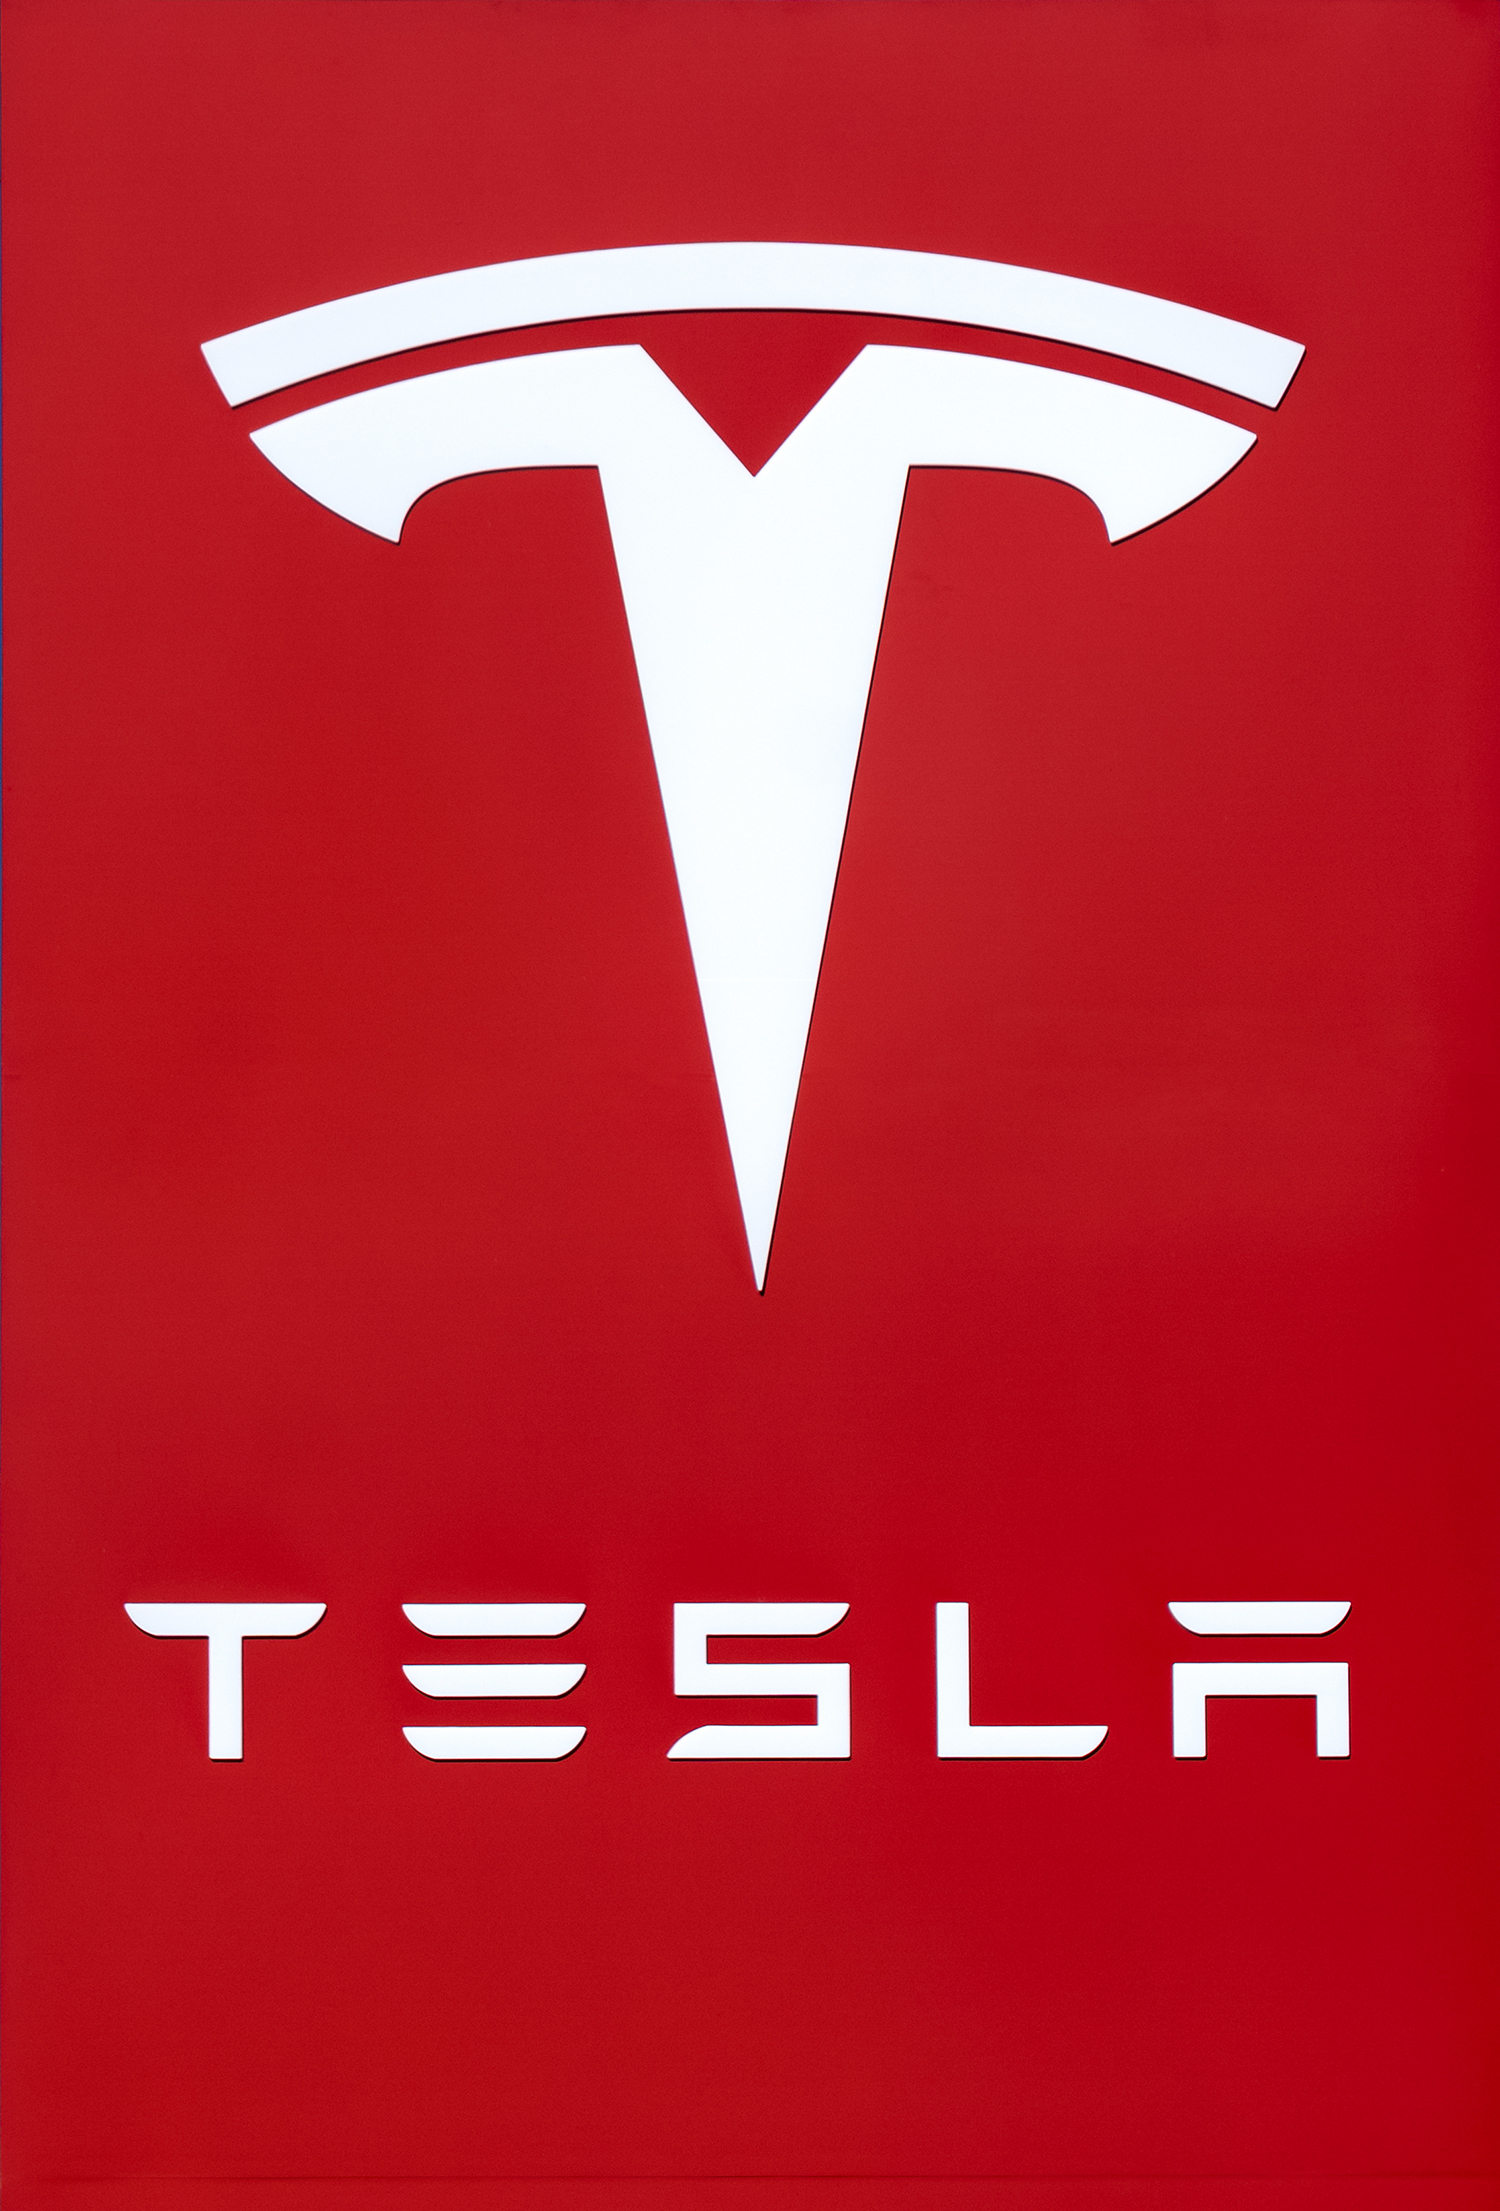 Tesla To Offer Auto Insurance Program In Texas